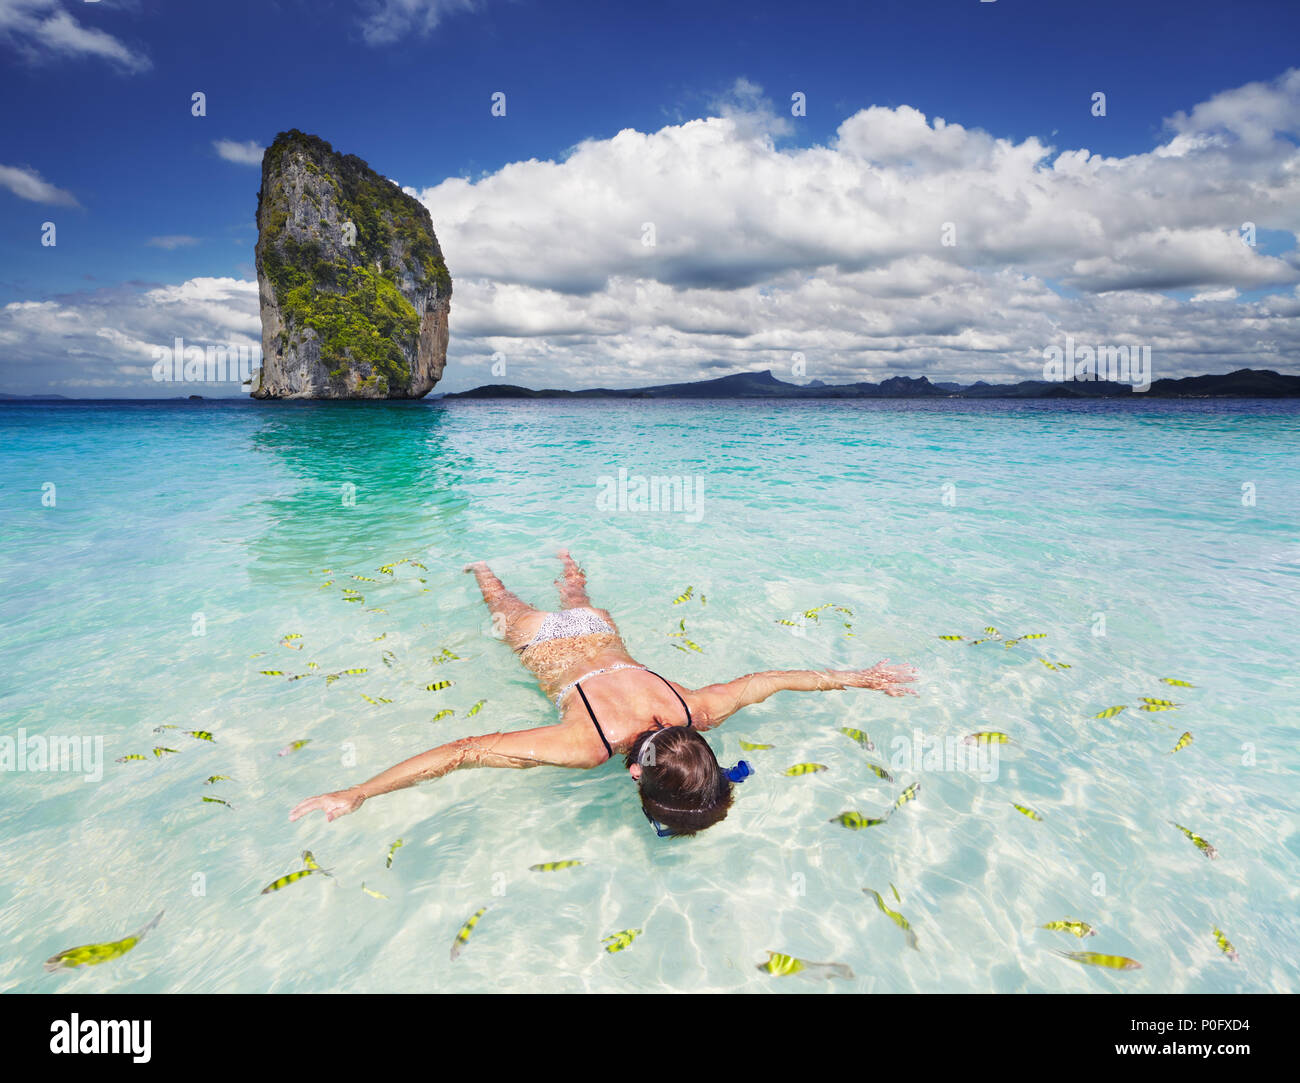 Woman swimming with snorkel, Andaman Sea, Thailand Stock Photo